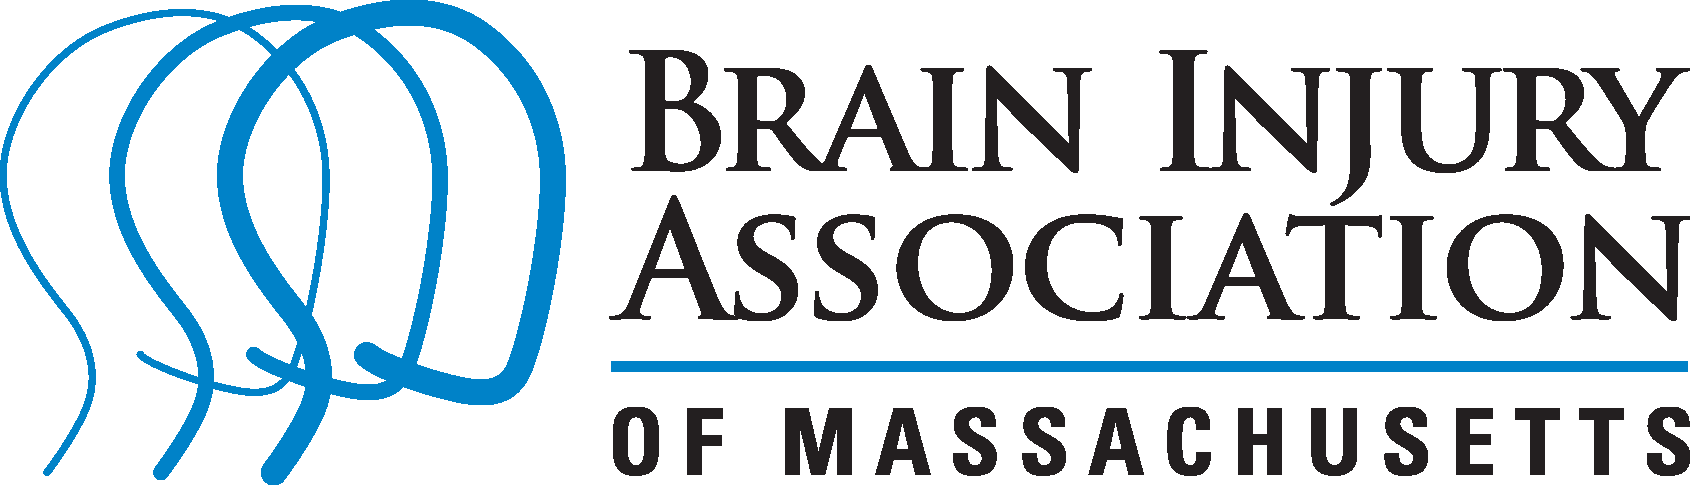 Featured Image for Brain Injury Association of Massachusetts